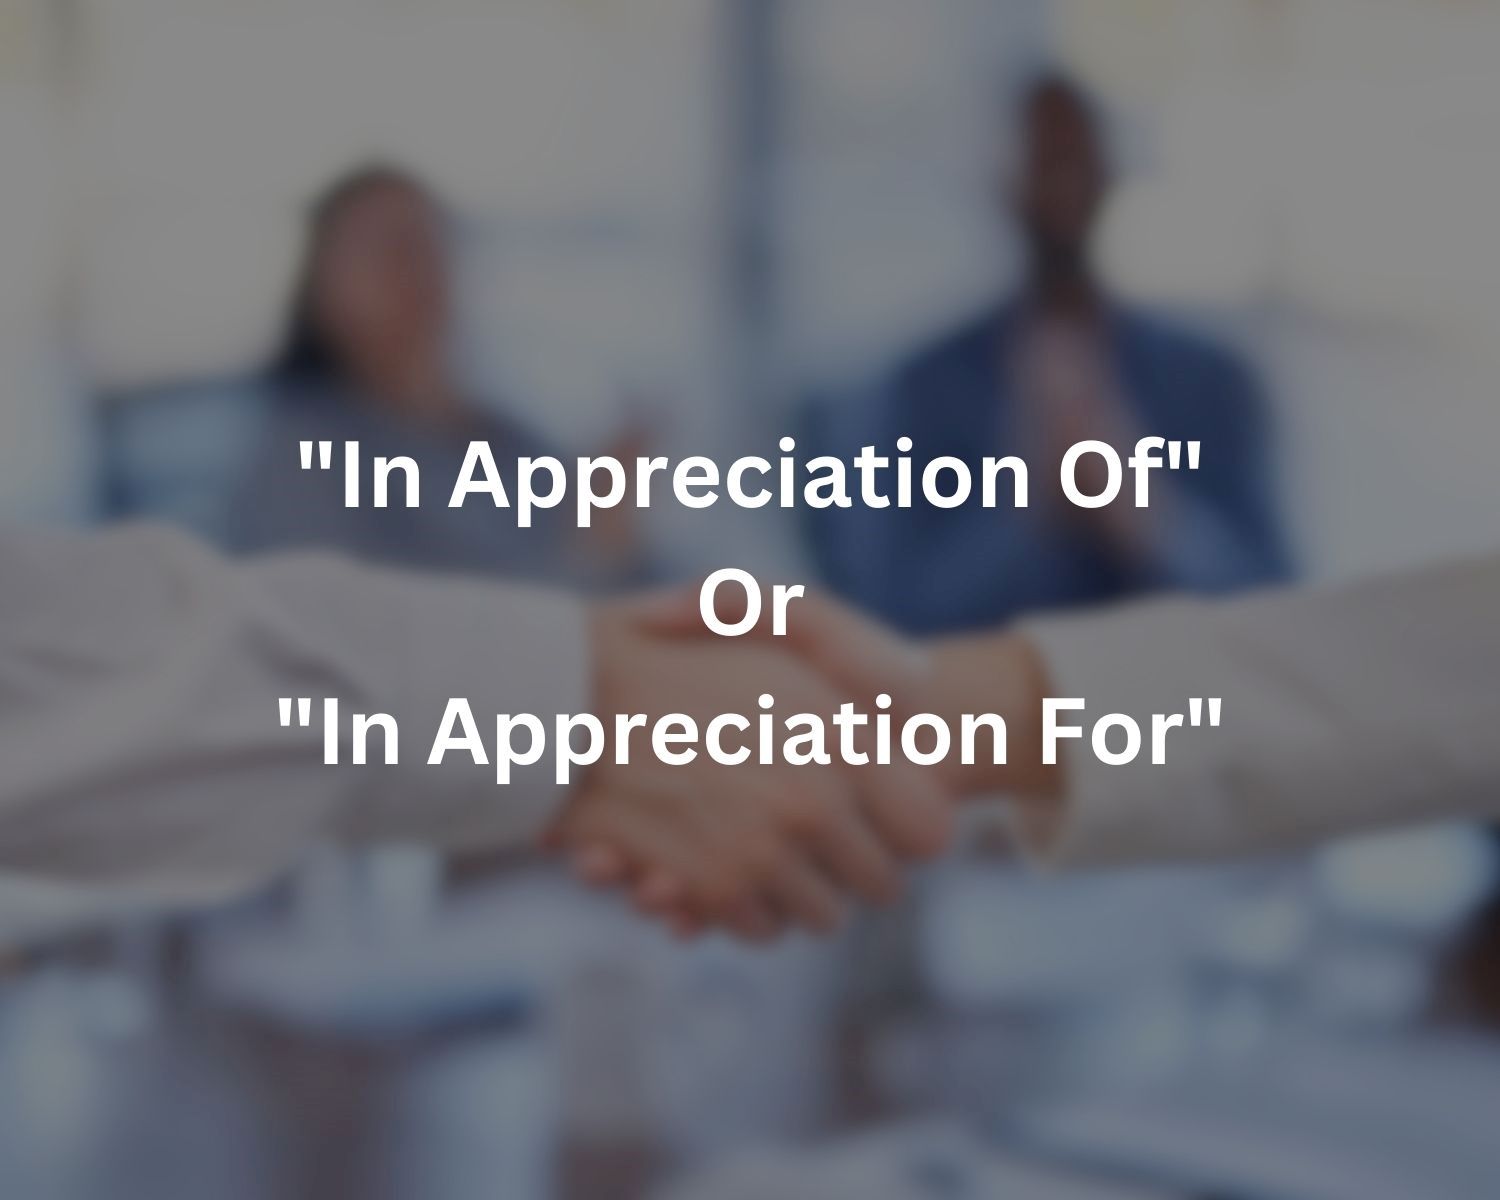 Which Phrase Is Correct: “In Appreciation Of” Or “In Appreciation For”?